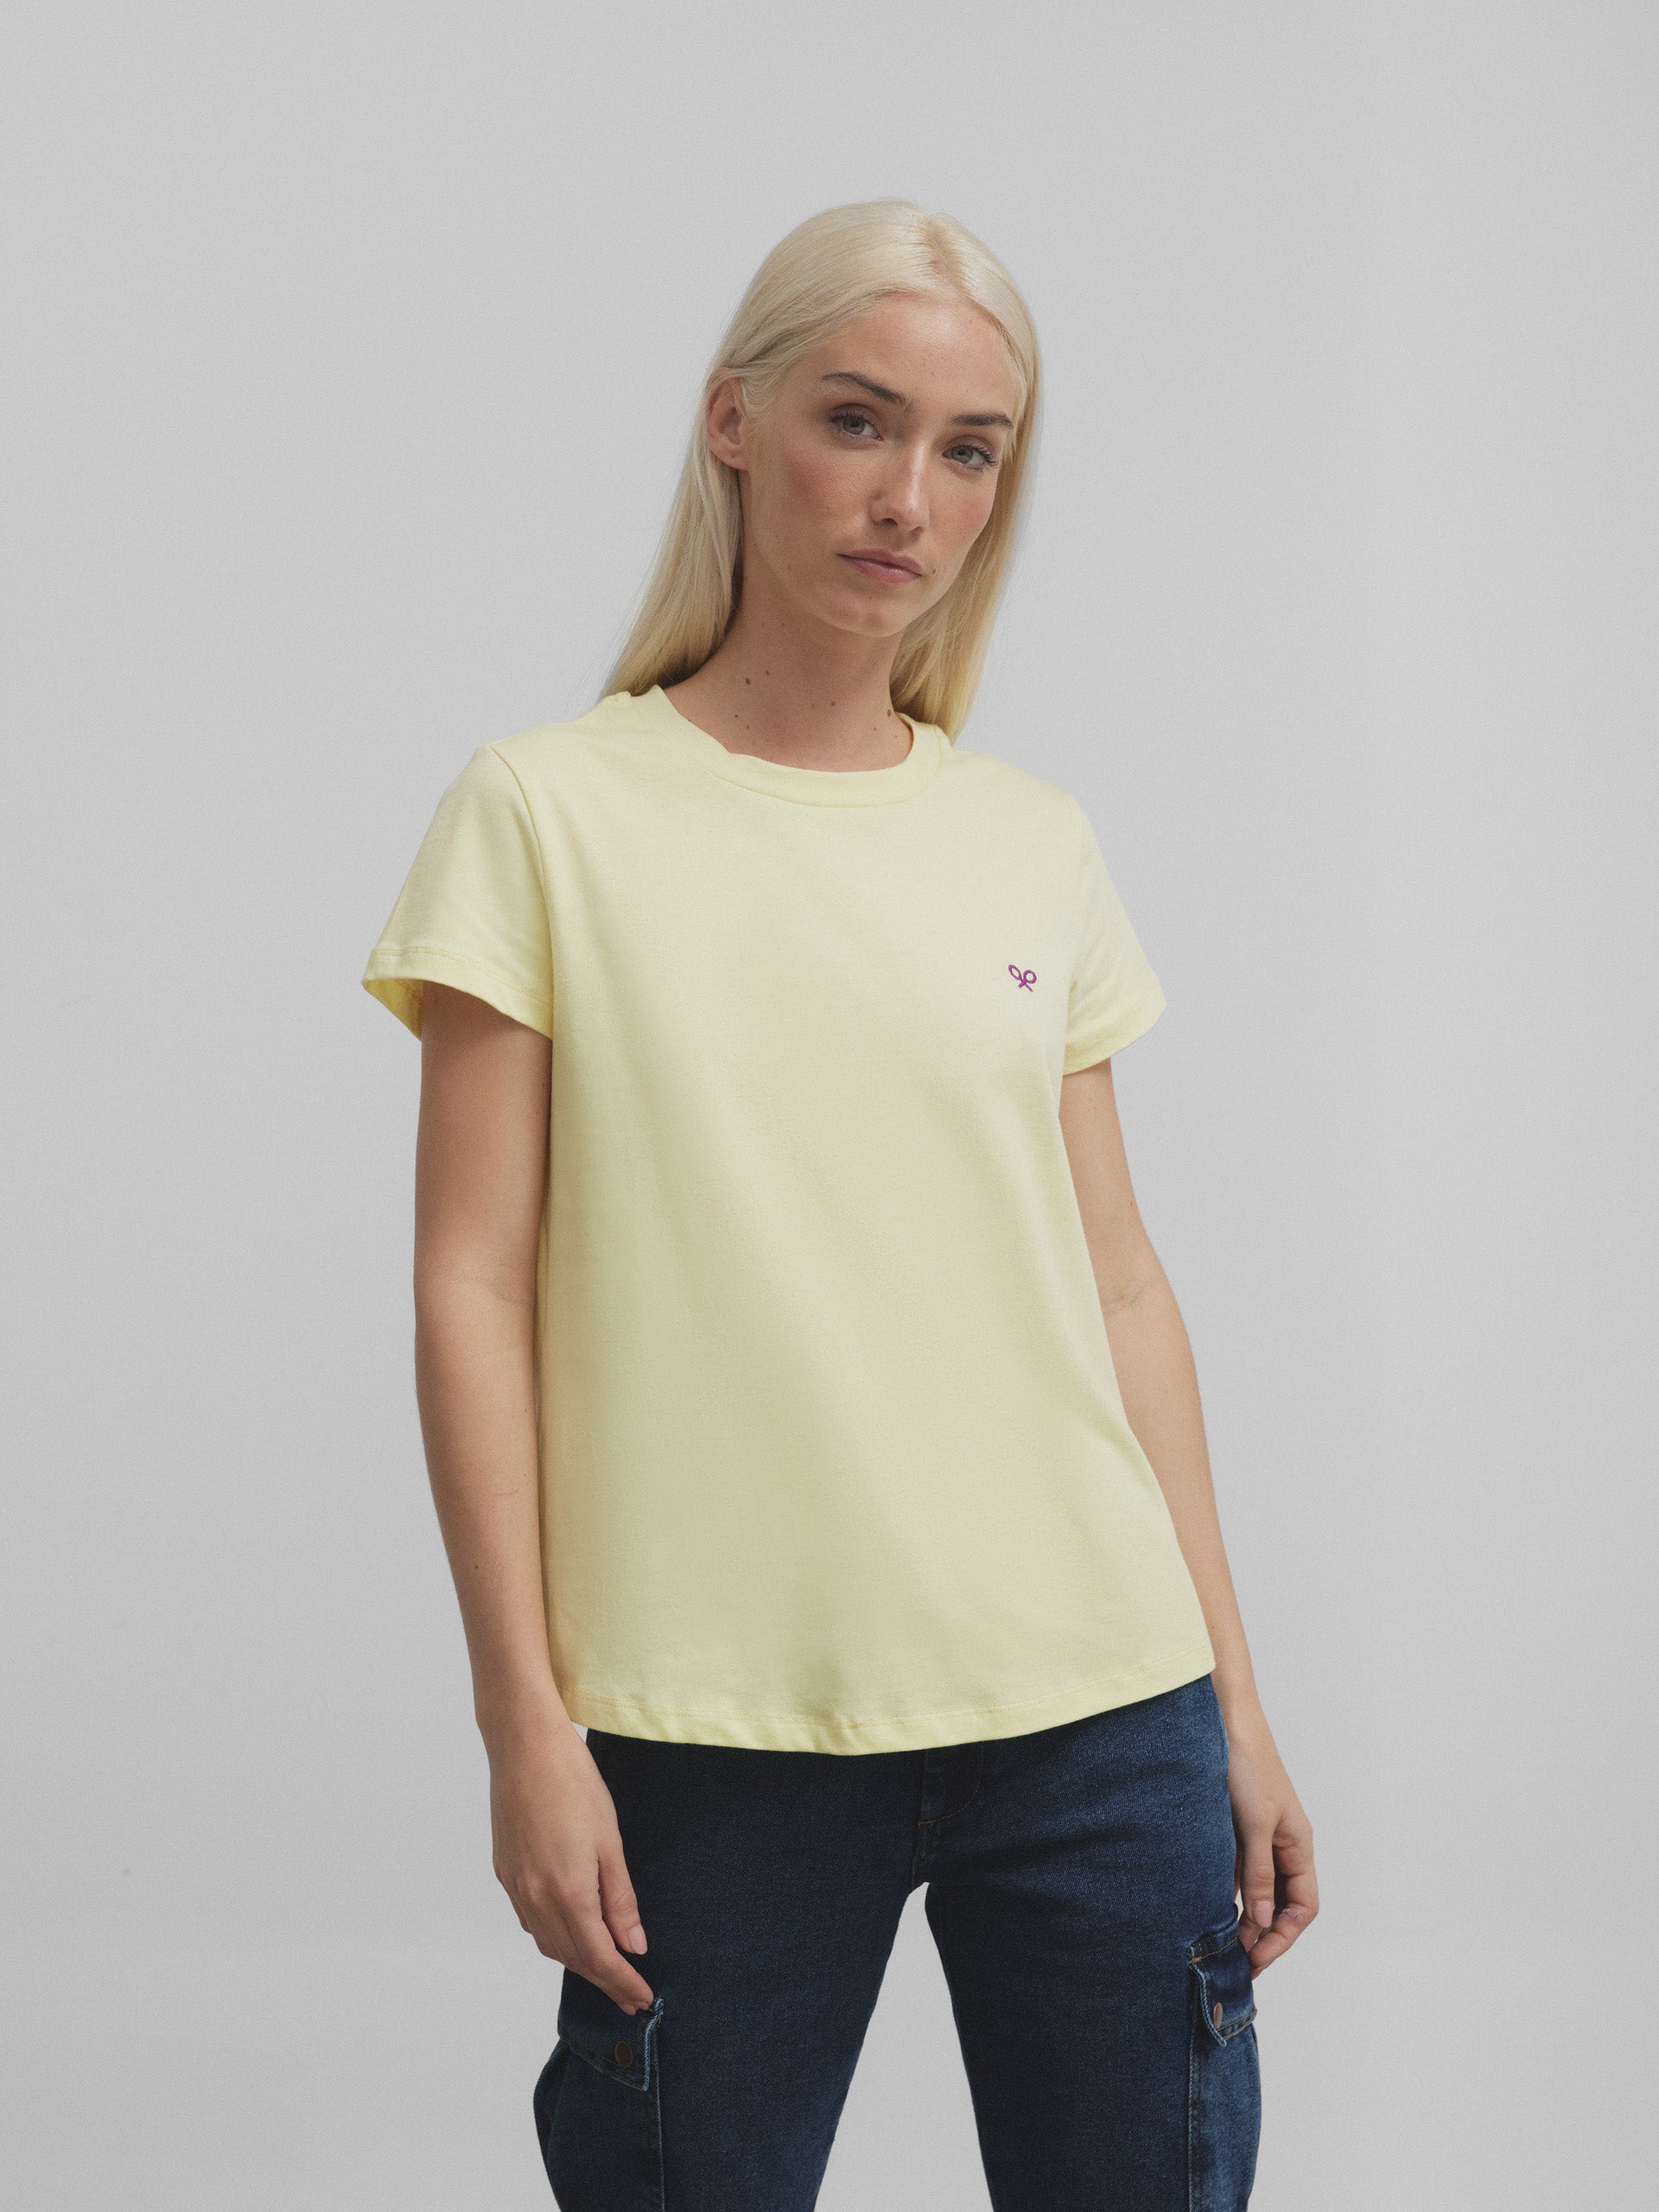 Tee-shirt sourire femme jaune